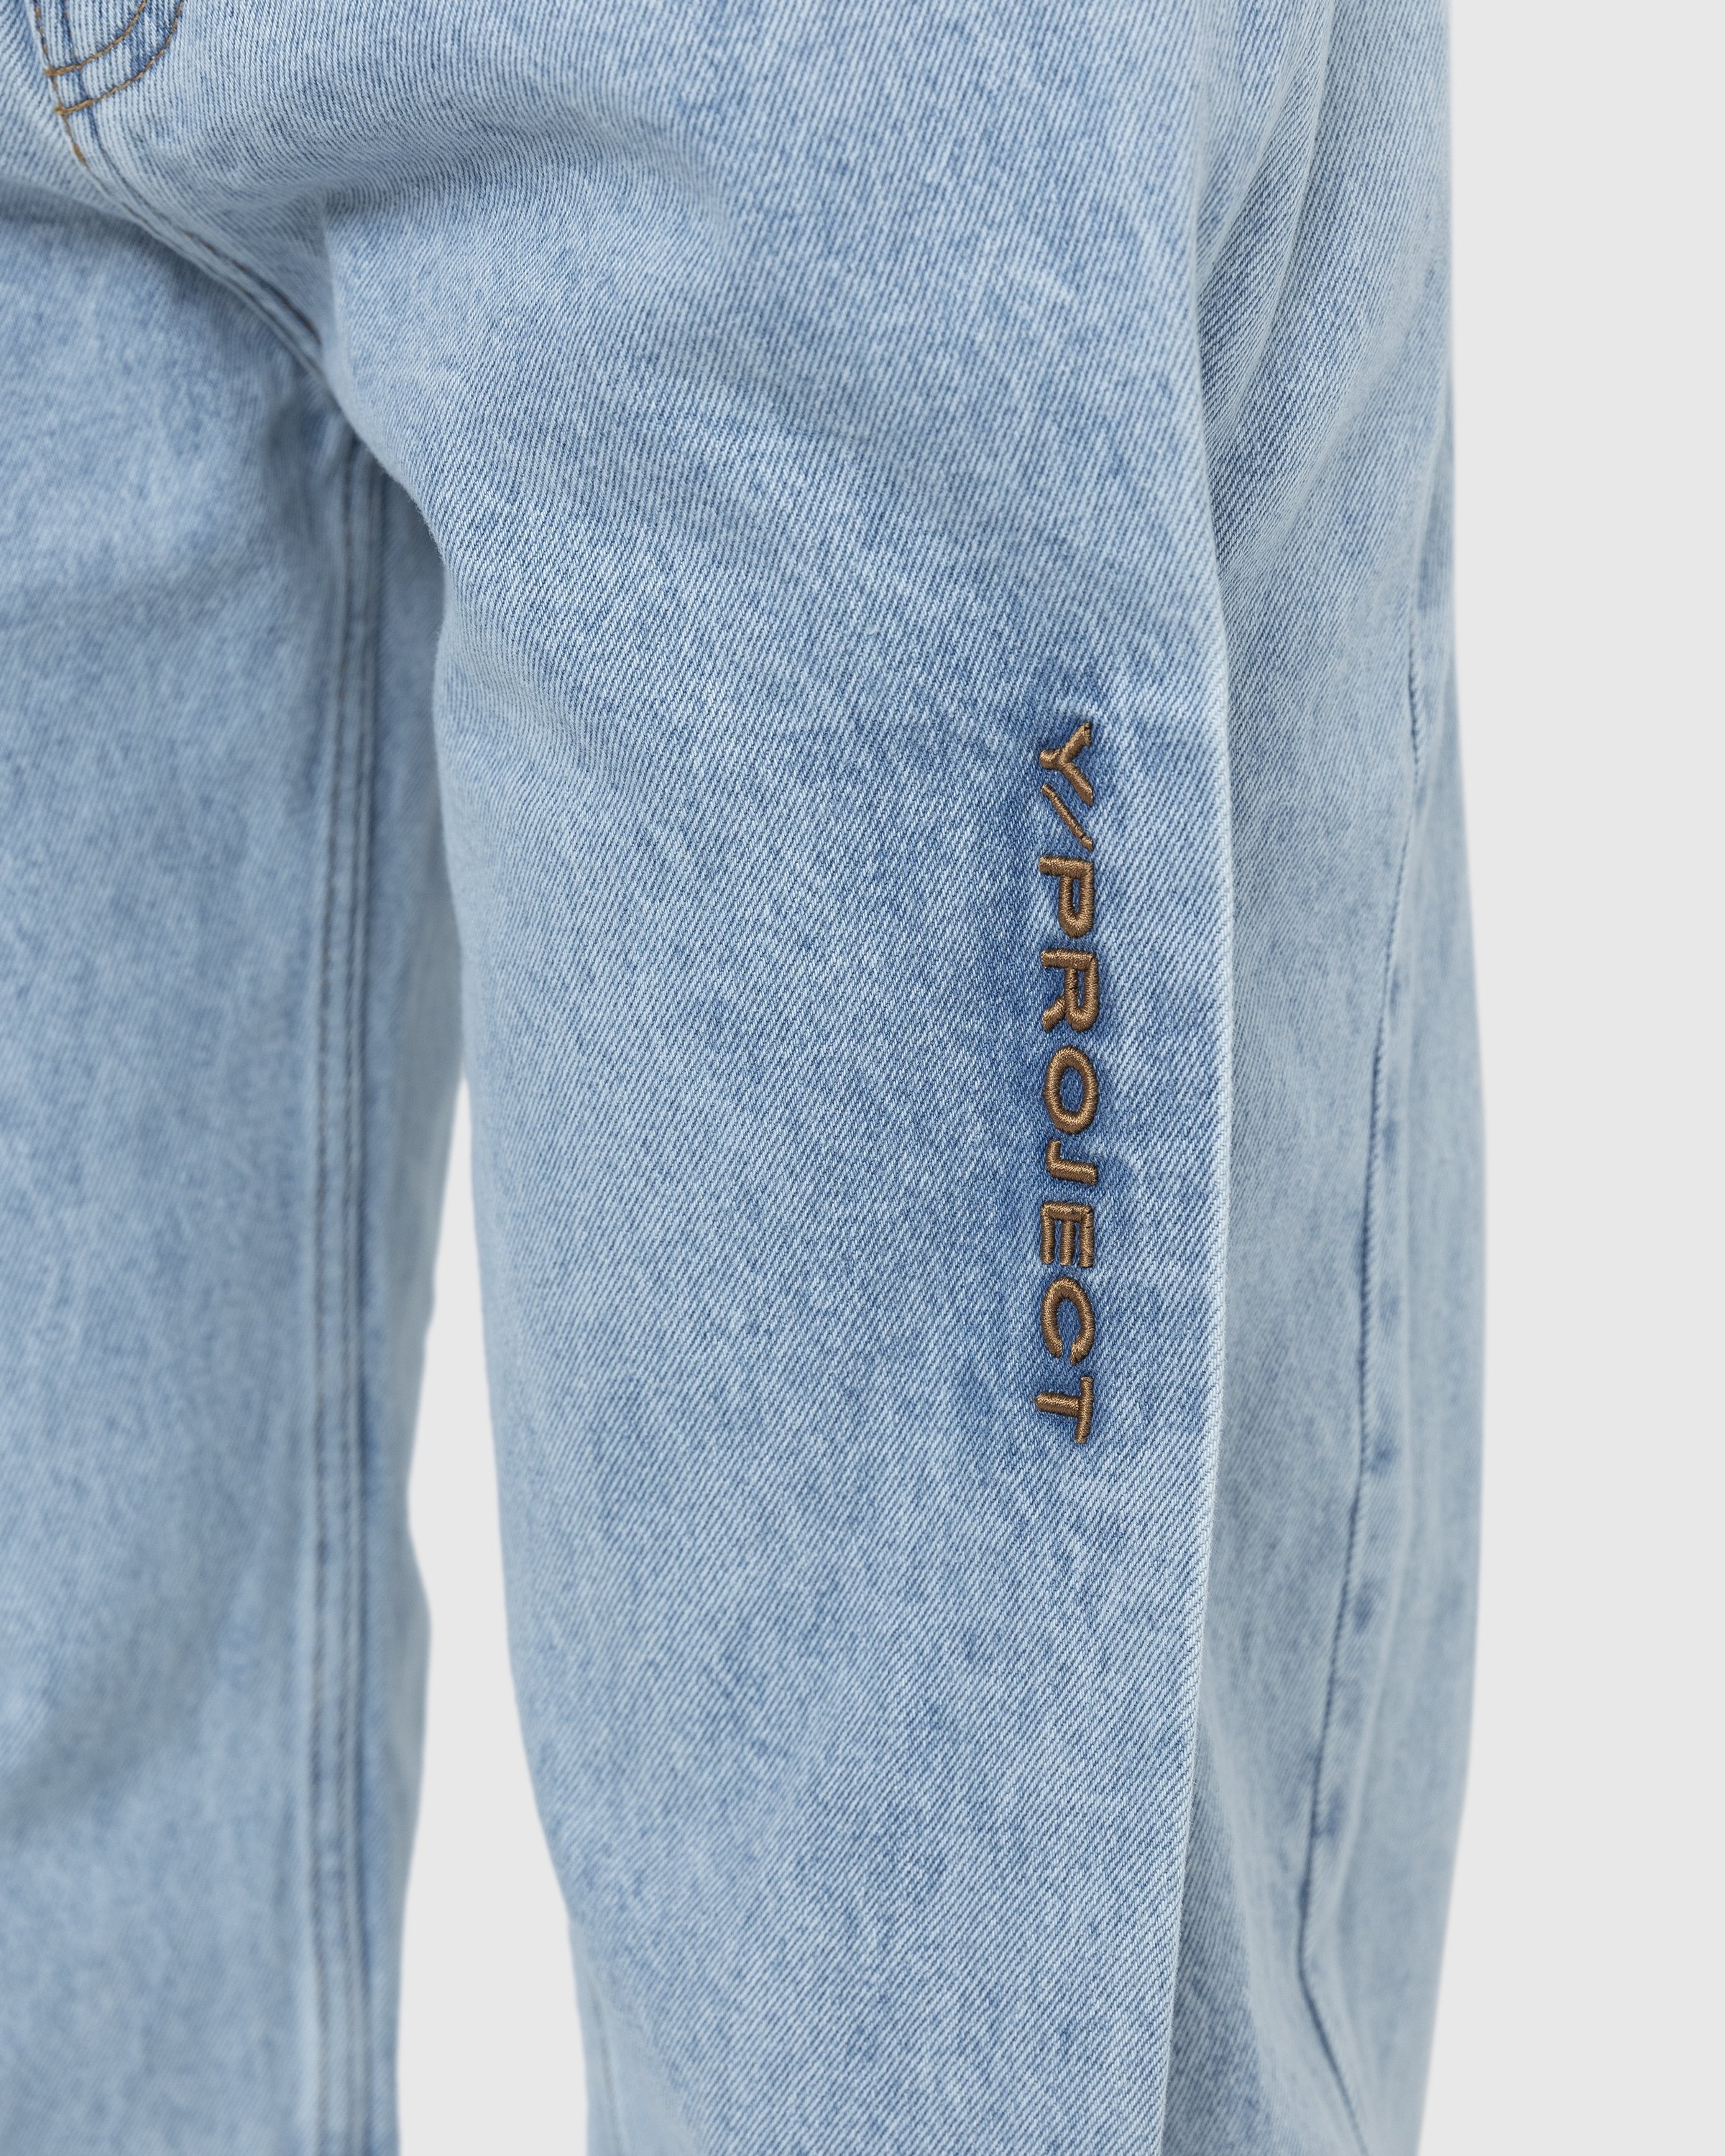 Y/Project – Pinched Logo Jeans Blue - Denim - Blue - Image 7